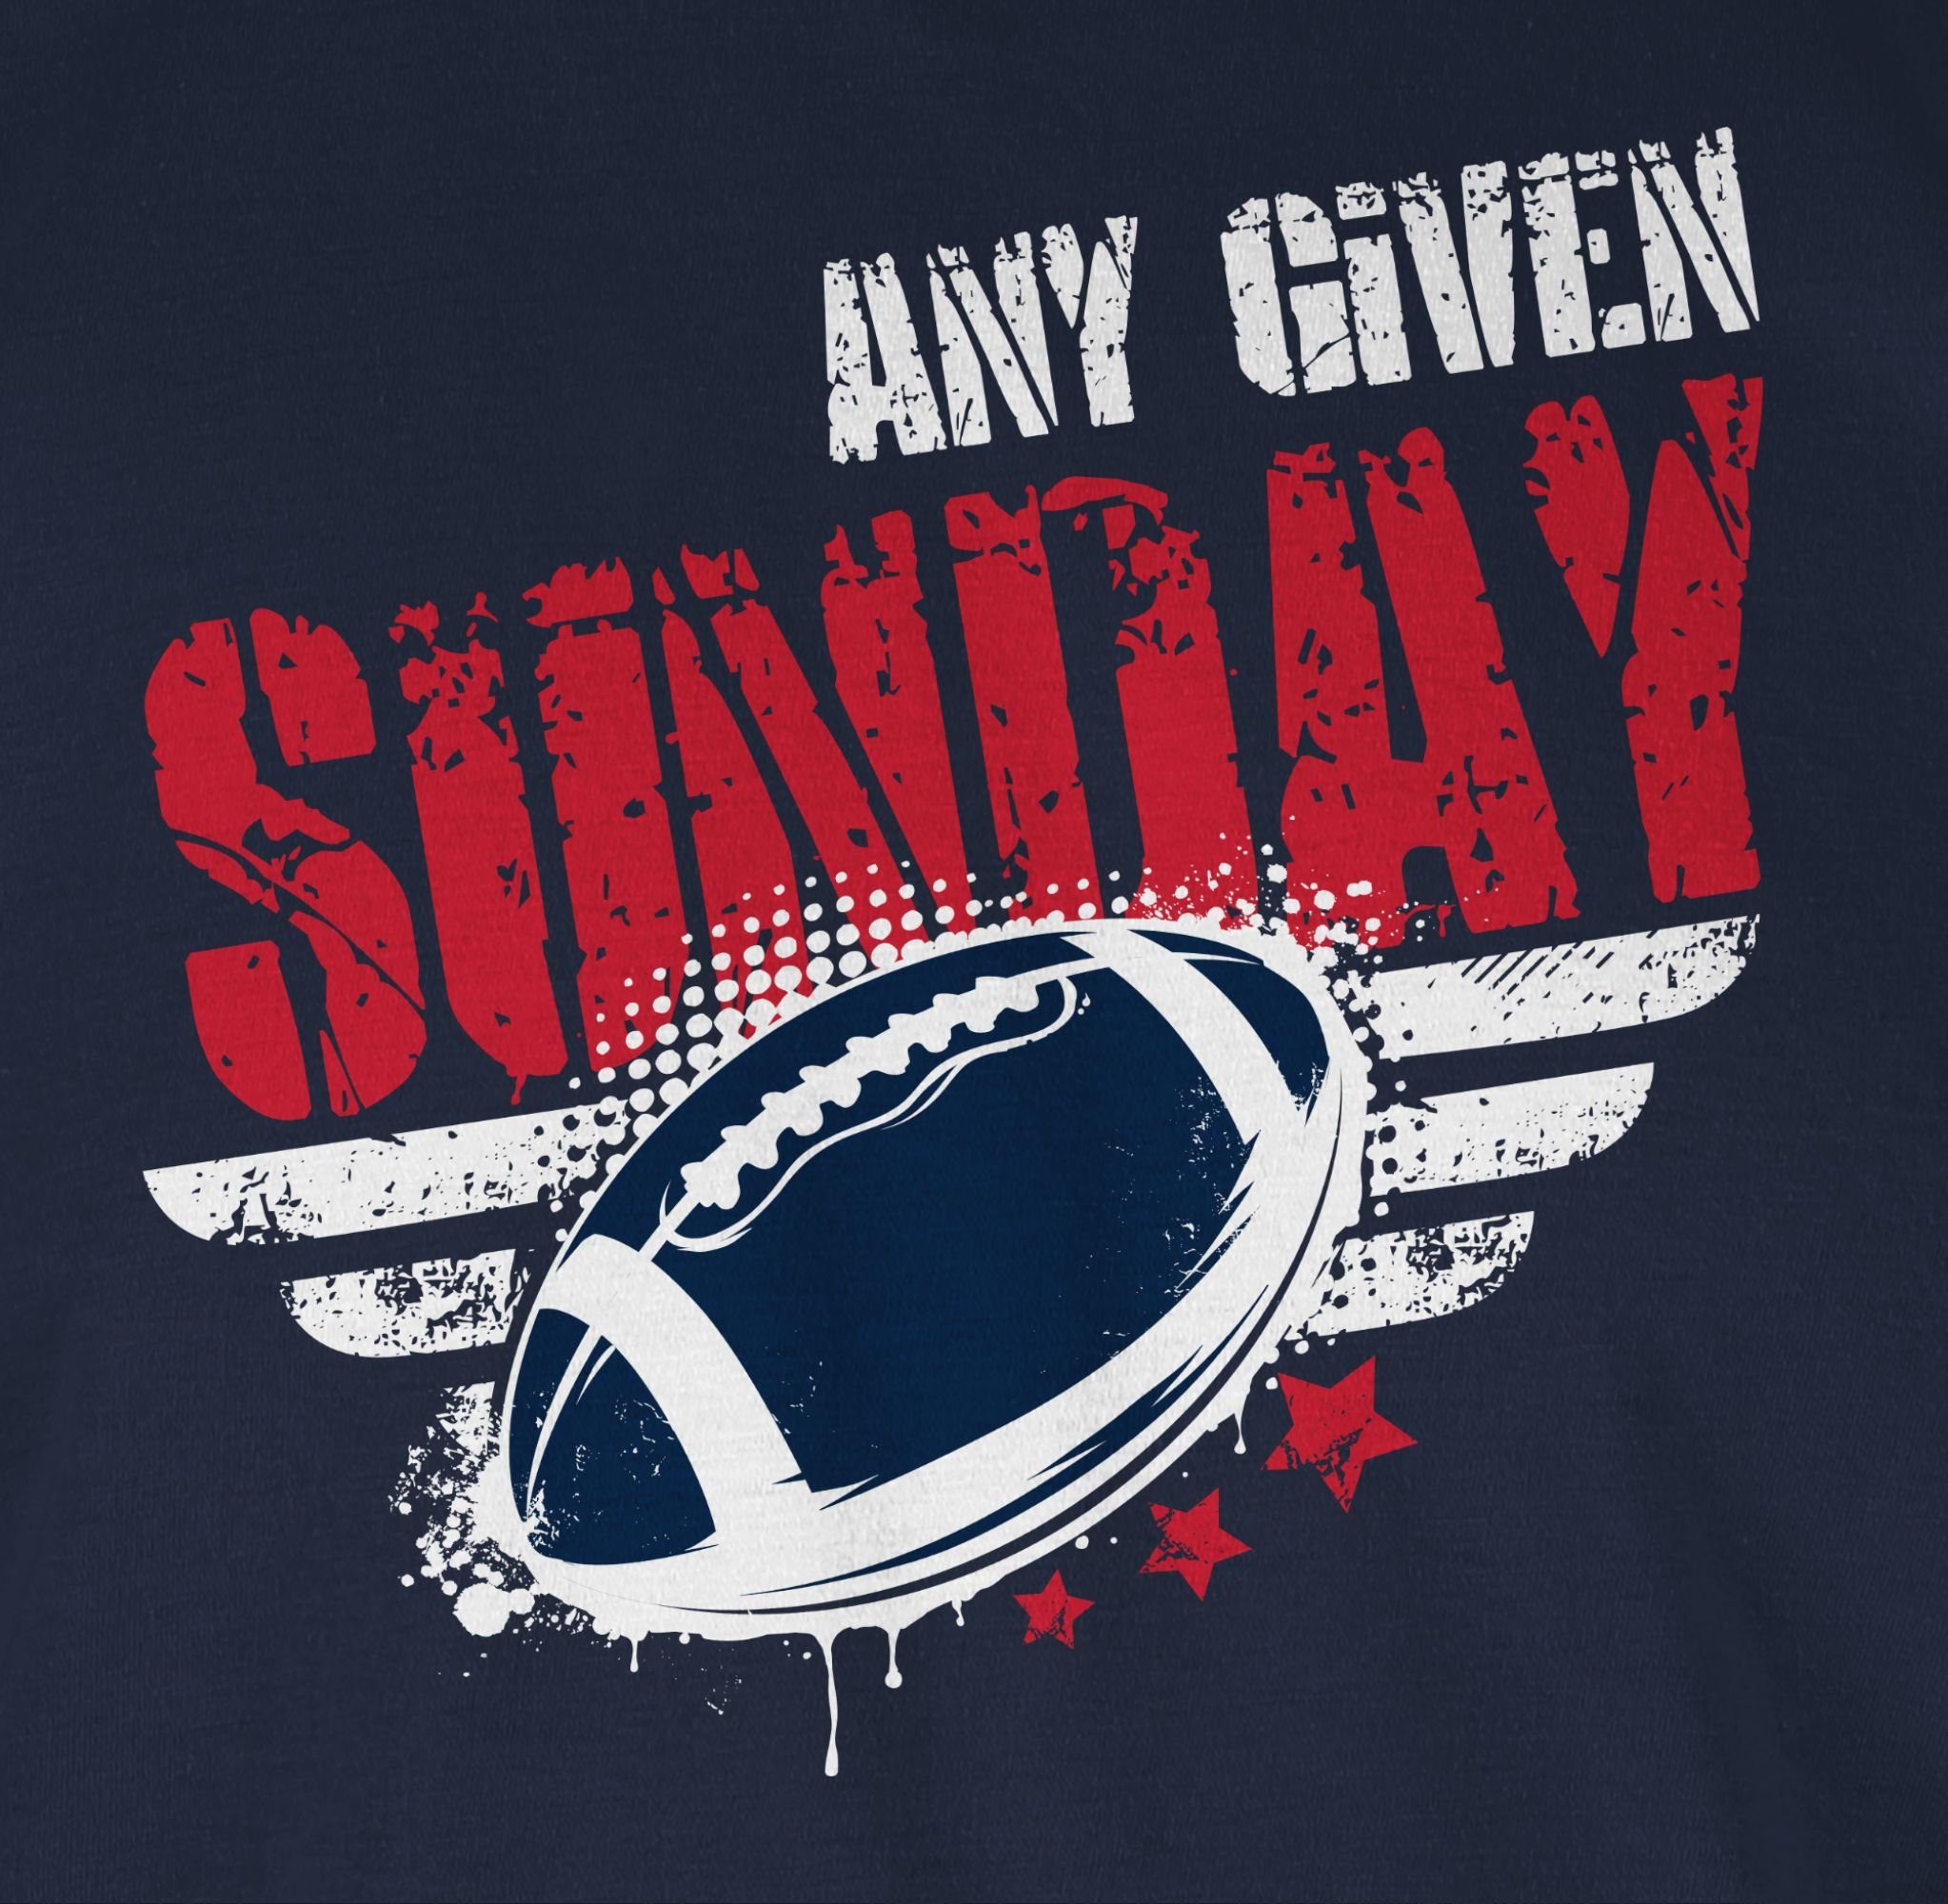 NFL Given 02 New Football England Shirtracer Navy T-Shirt Blau Football American Sunday Any